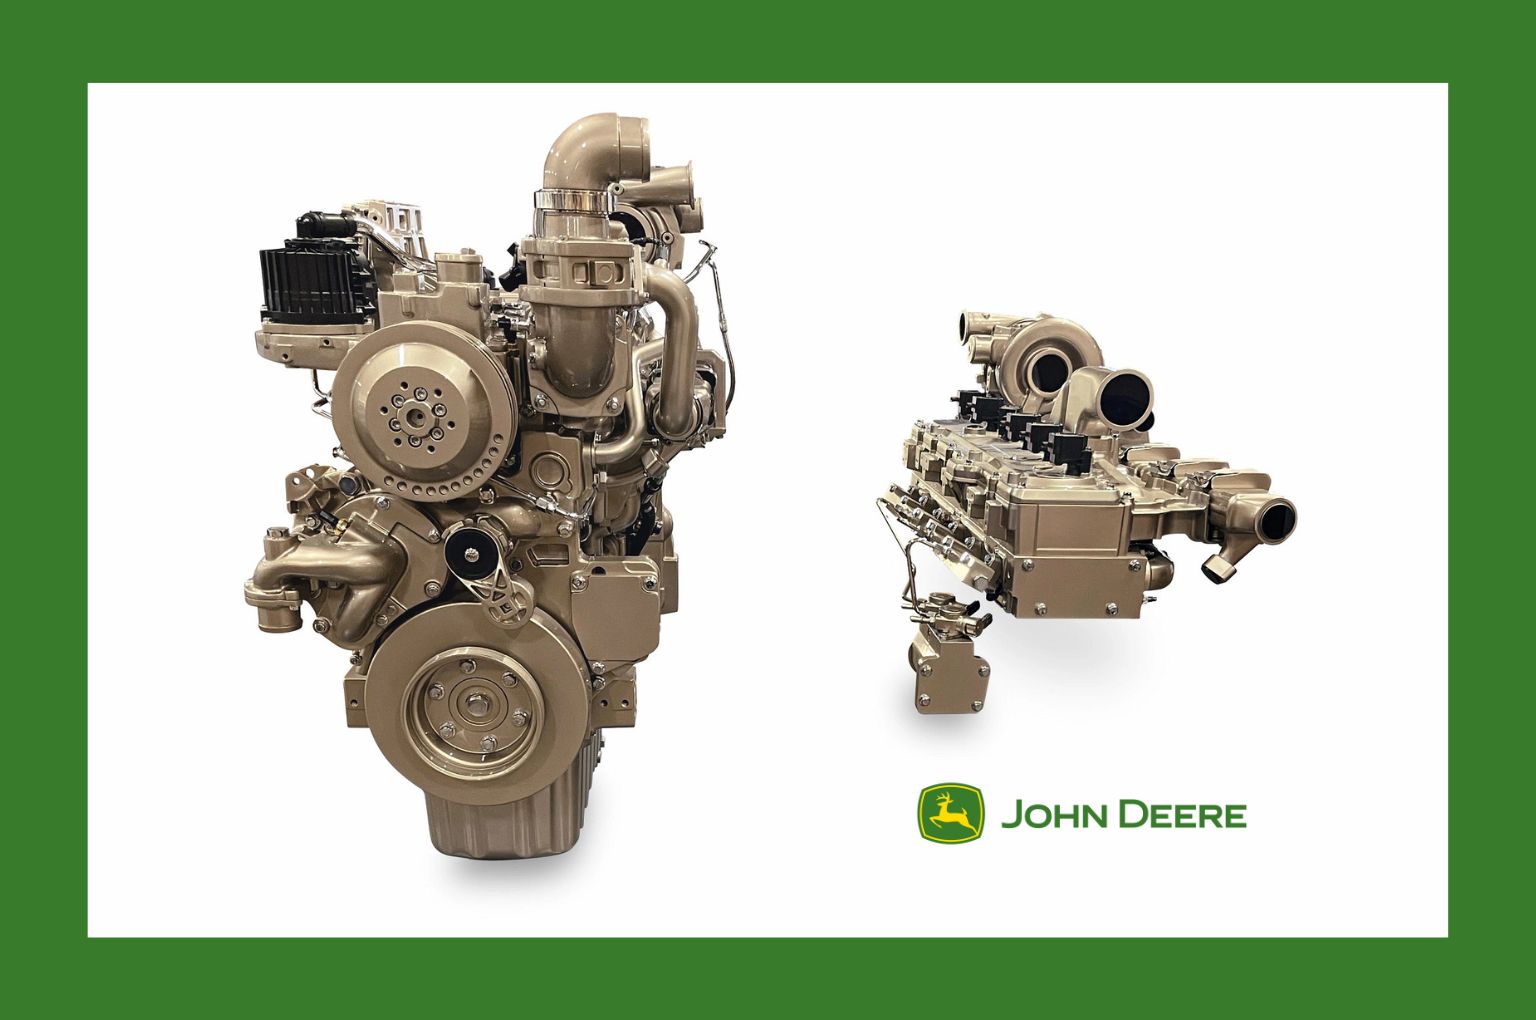 John Deere develops ethanol engine